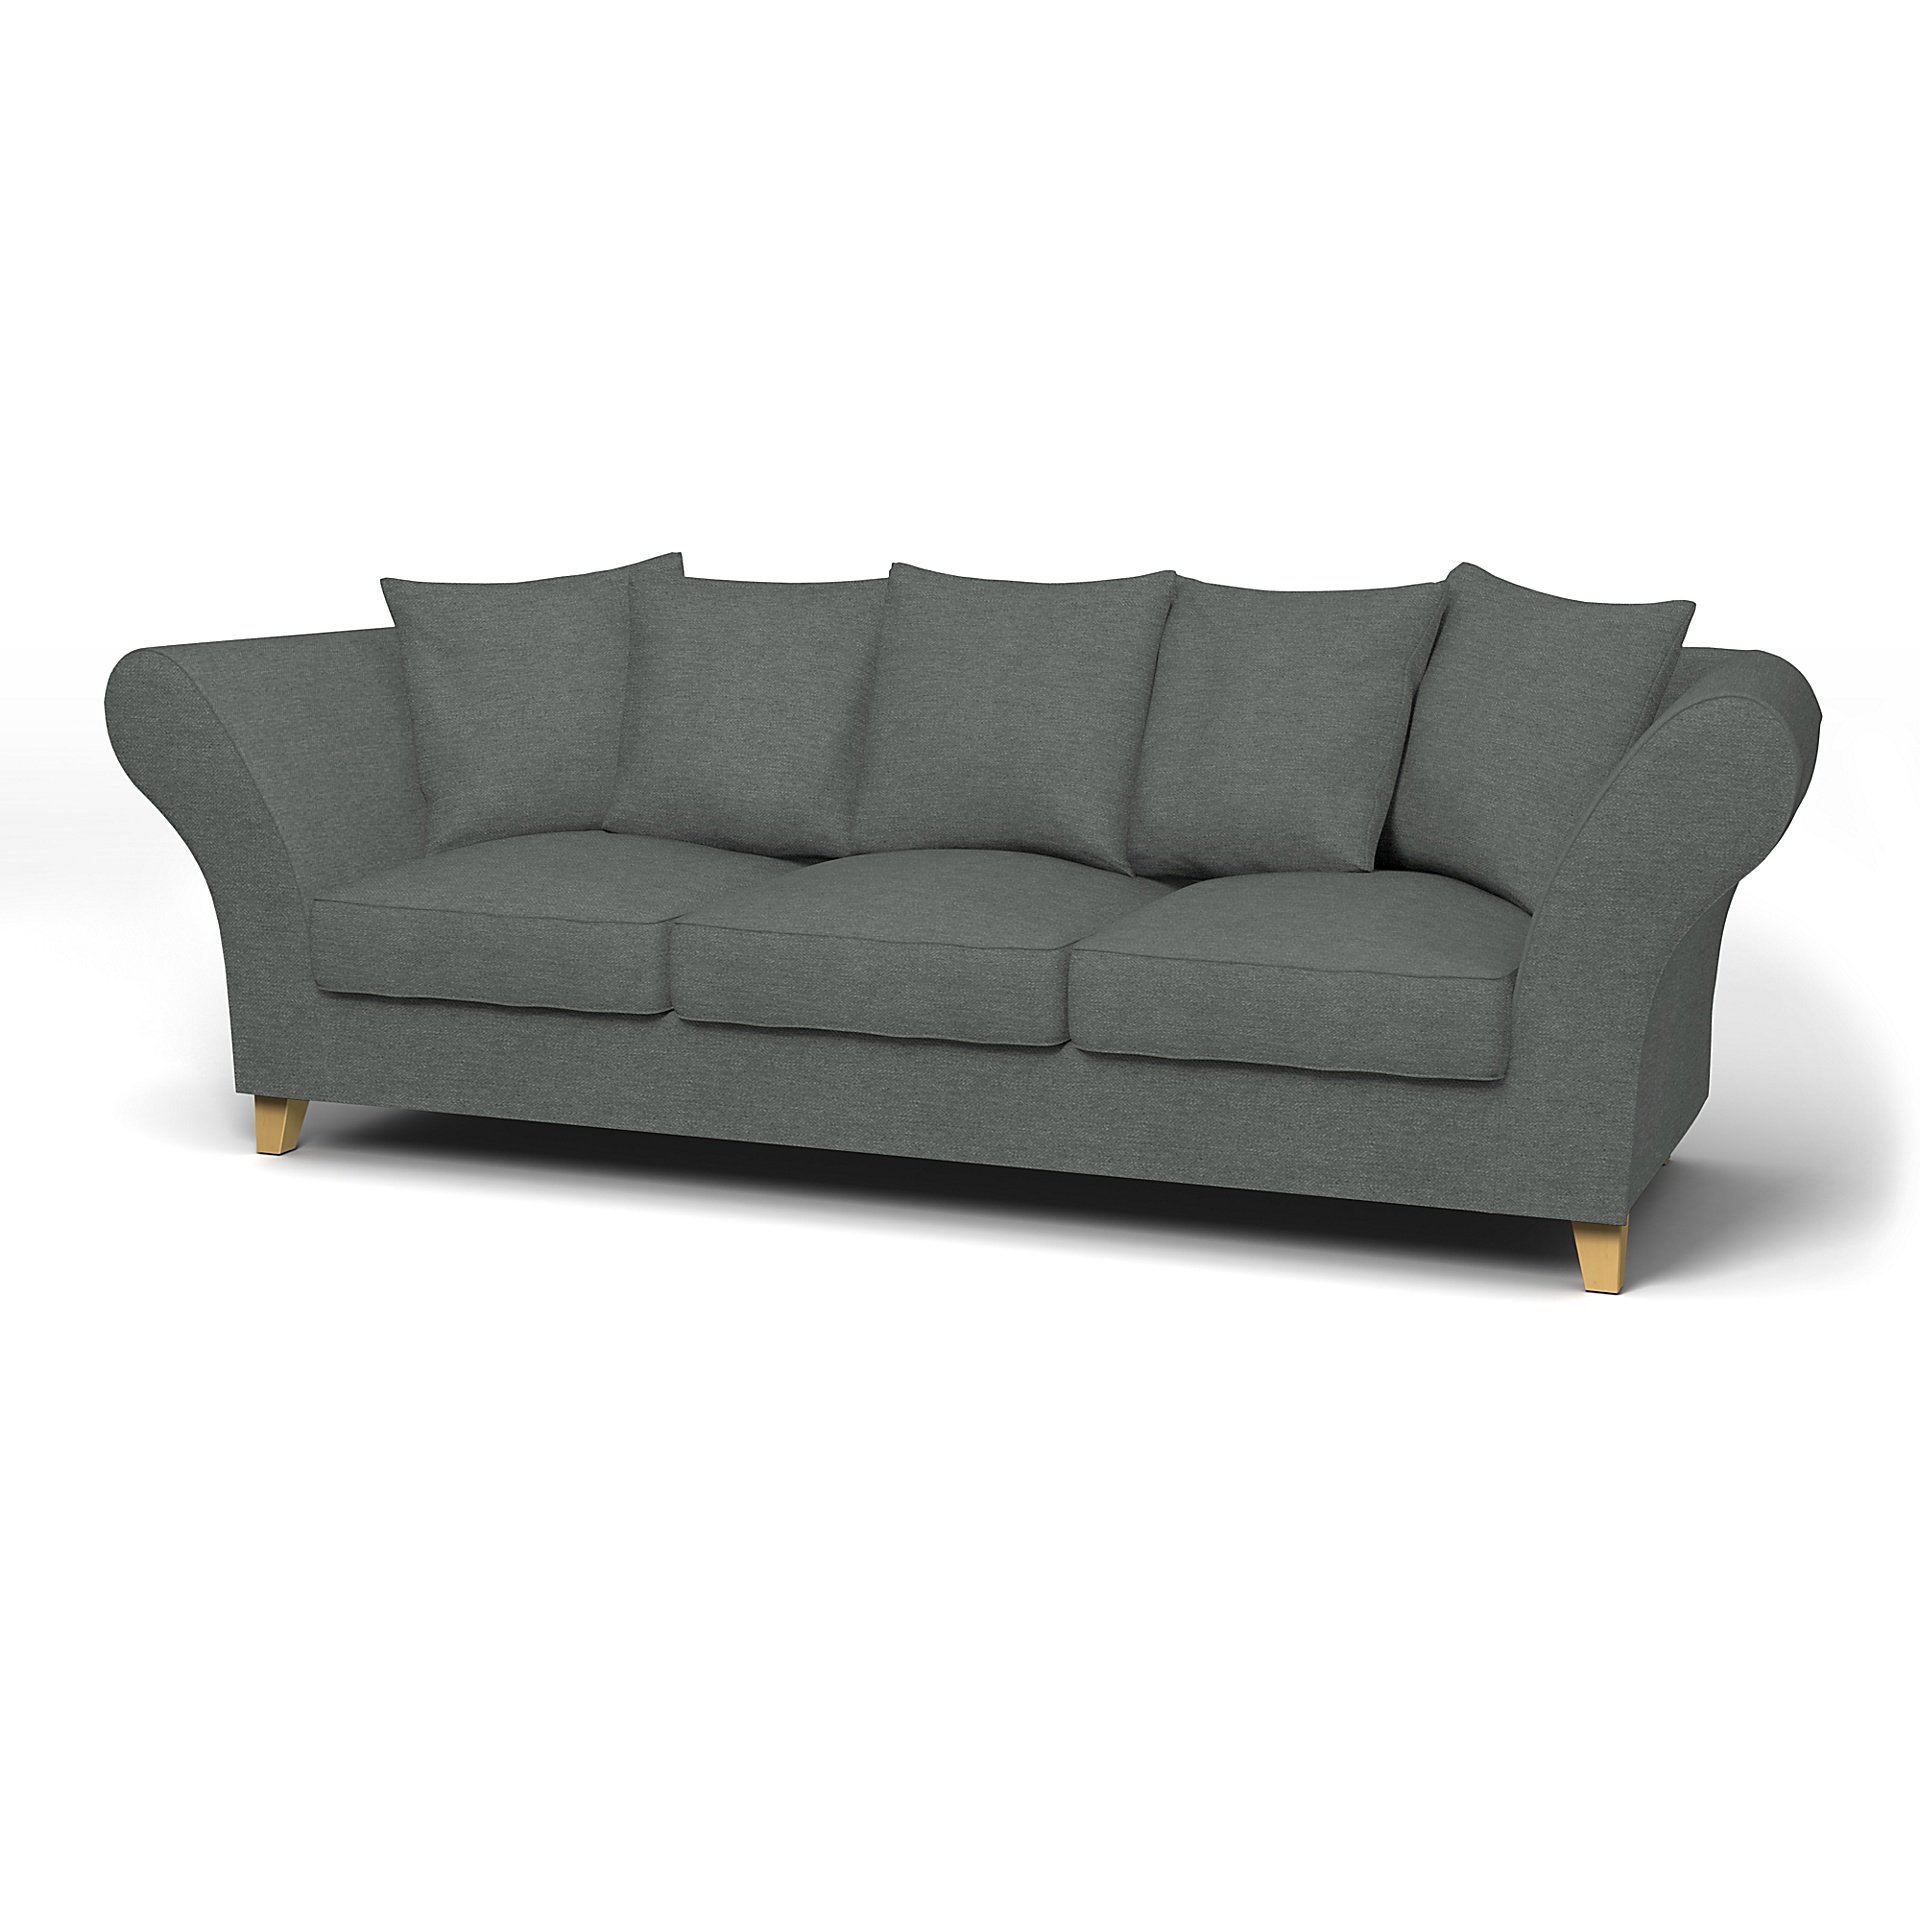 IKEA - Backa 3.5 Seater Sofa Cover, Laurel, Boucle & Texture - Bemz